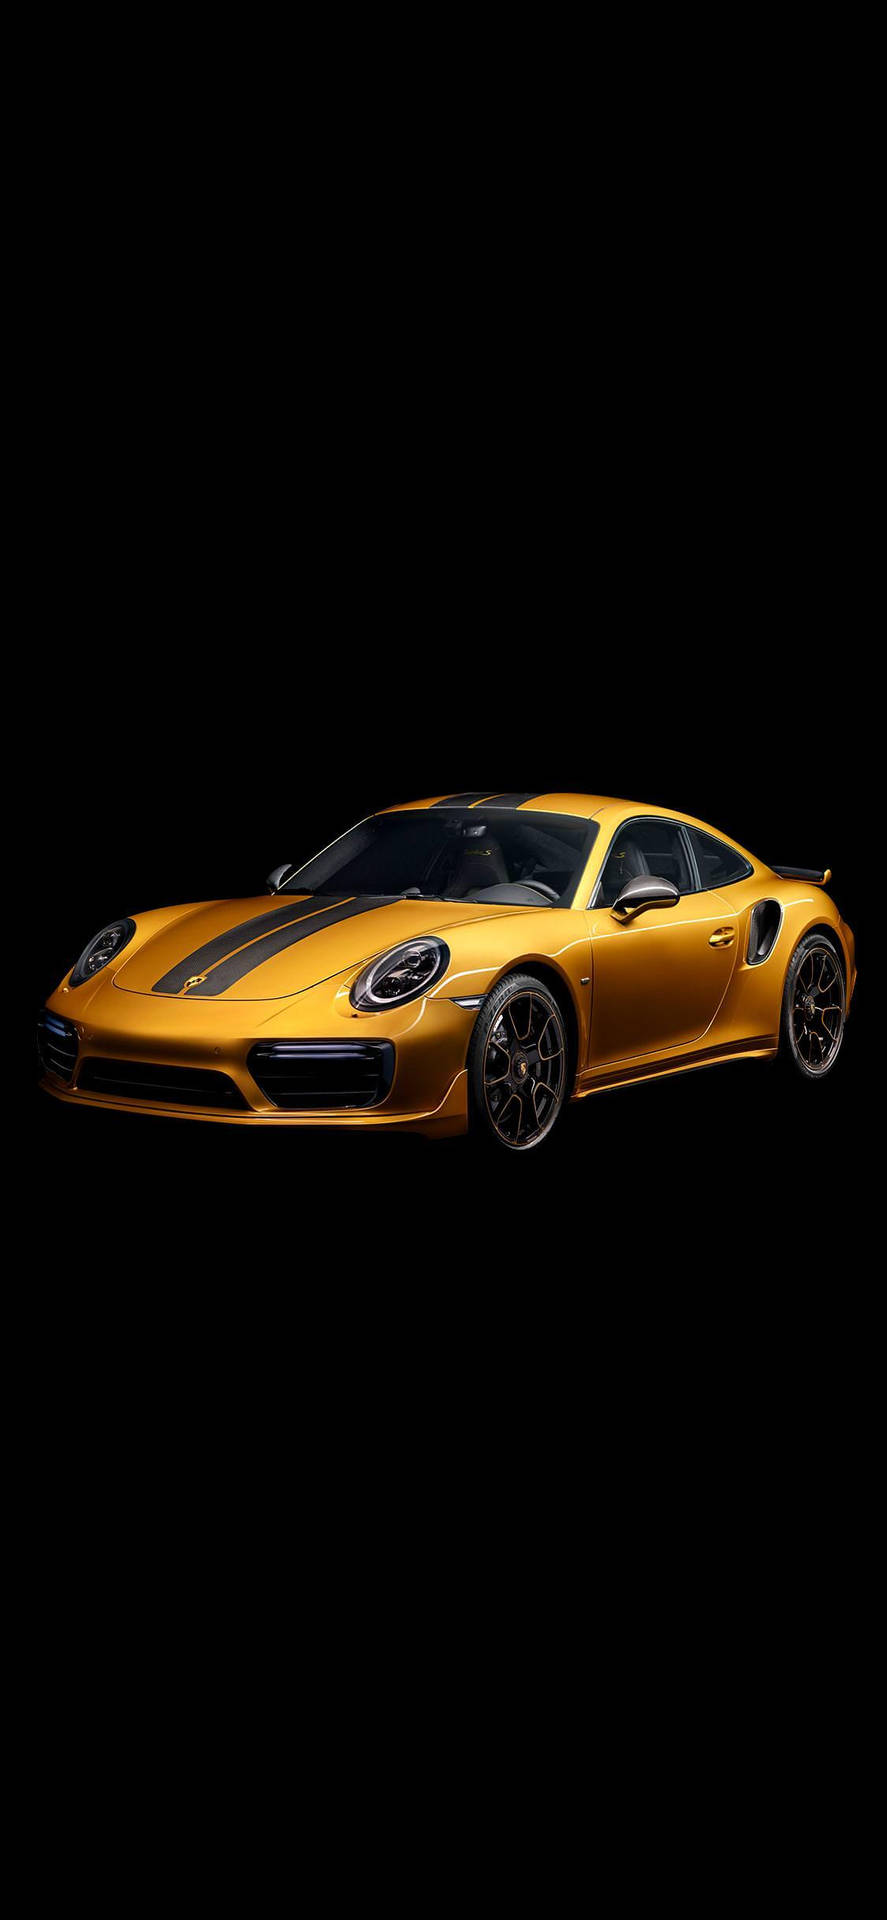 Iphone X Car Porsche Turbo S Background